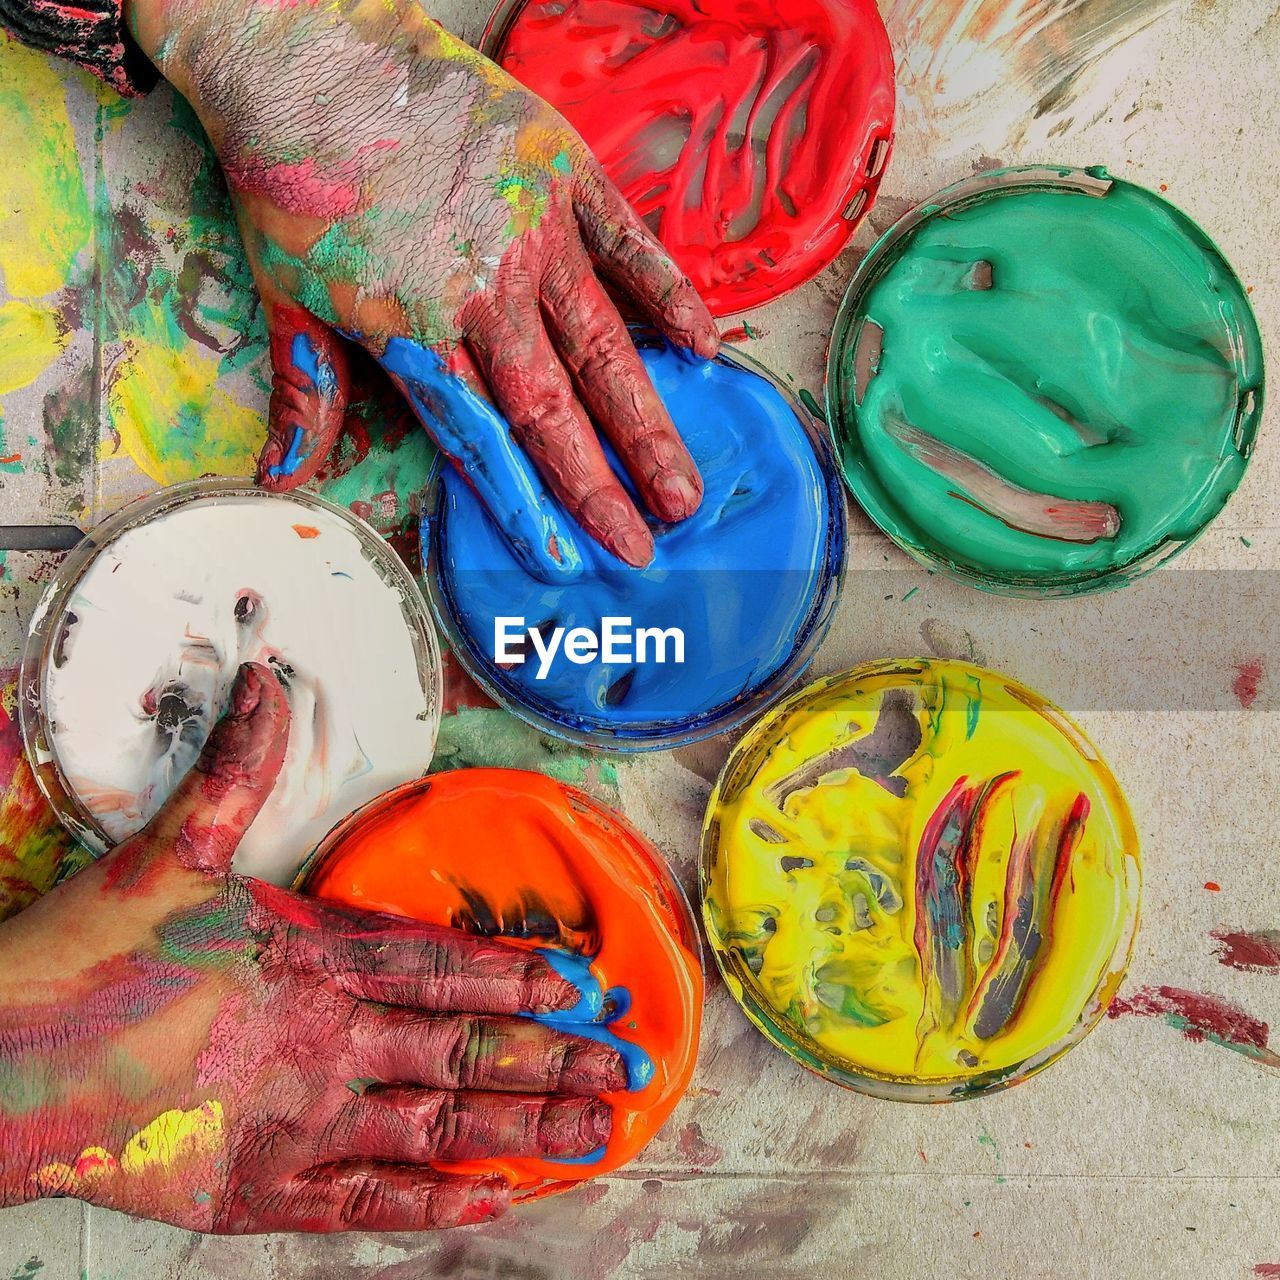 A child's hands mixing paints 